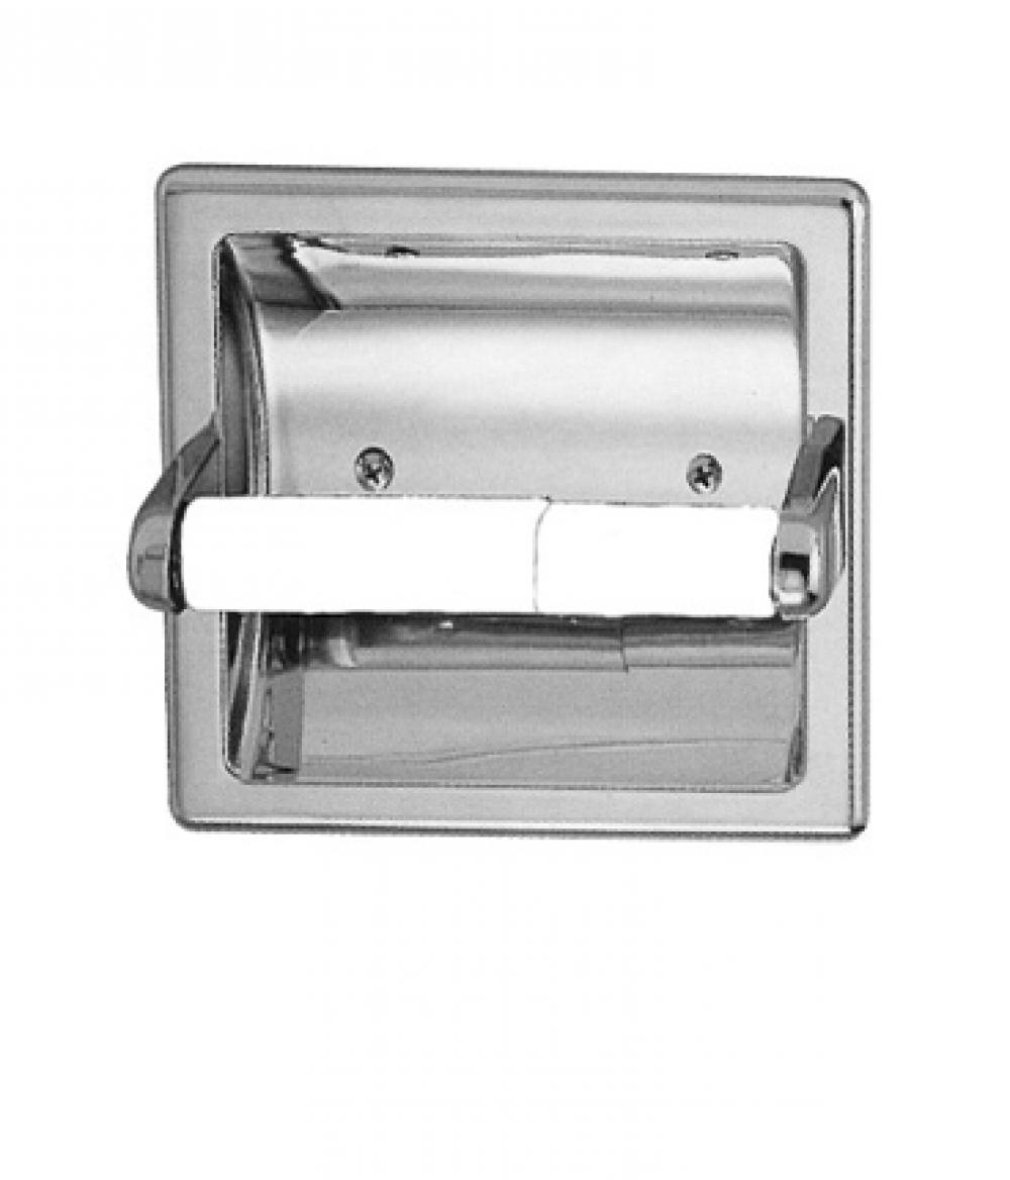 Gatco Recessed Toilet Paper Holder (Satin Nickel)